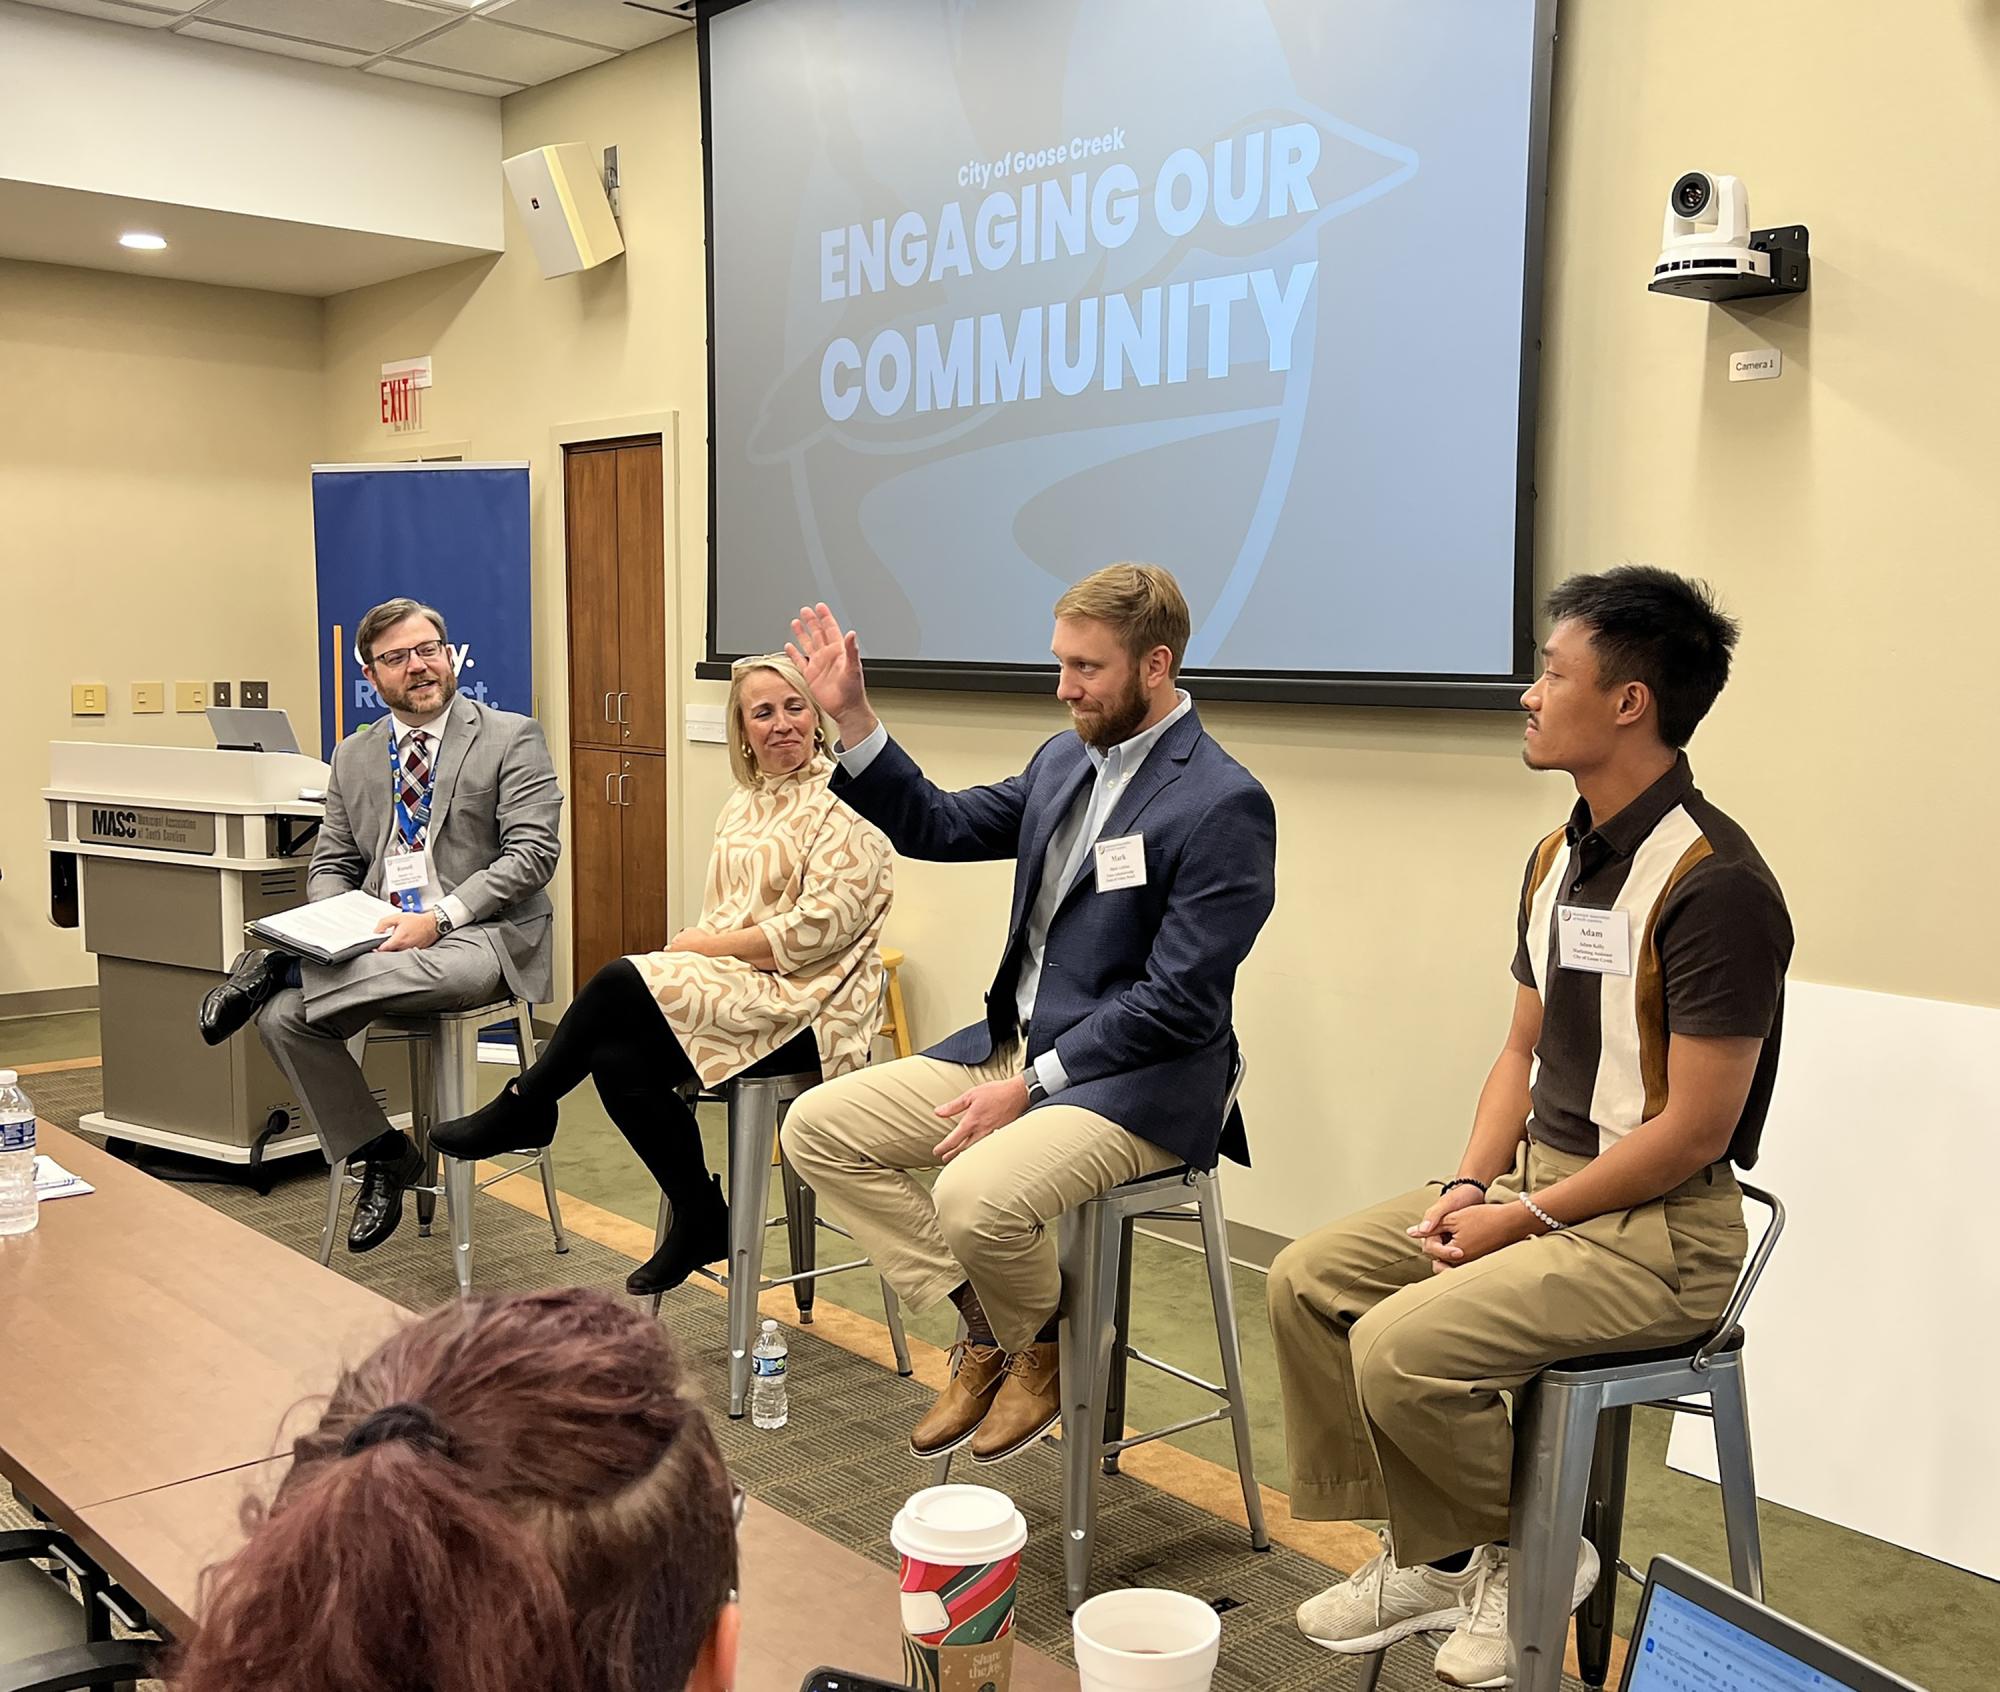 Community engagement panel